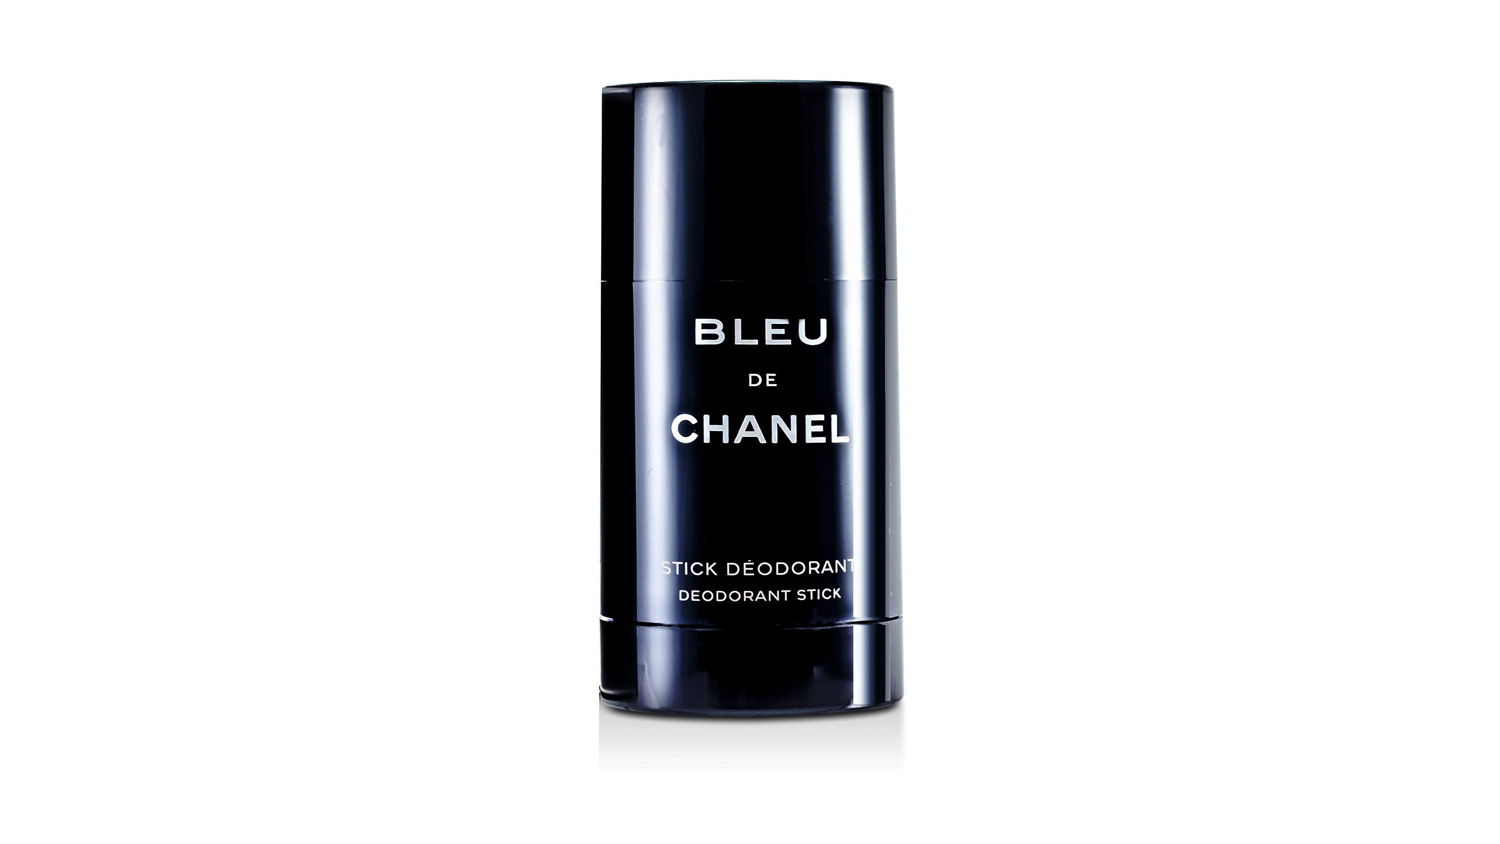 Chanel Bleu De EDT 100ml NZ Prices  PriceMe